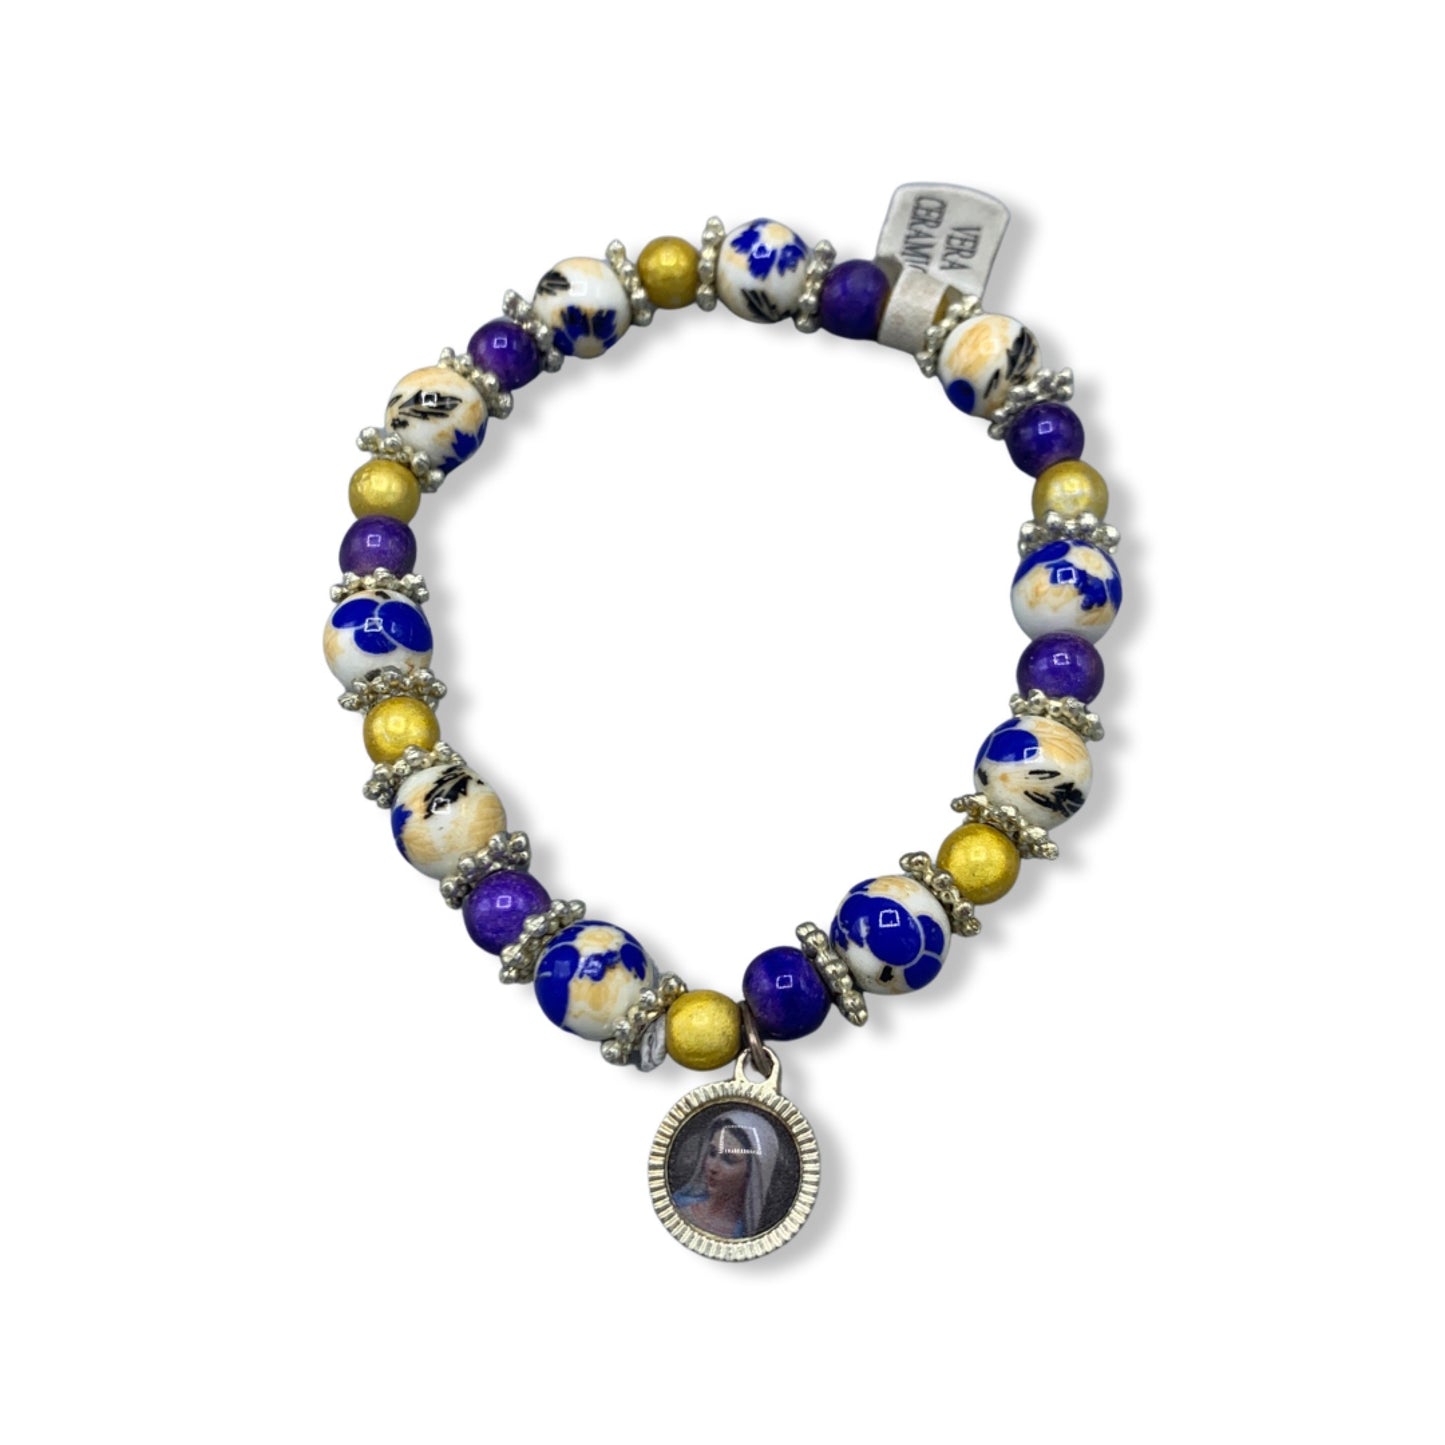 Ceramic Bead Bracelet of Assorted Colors